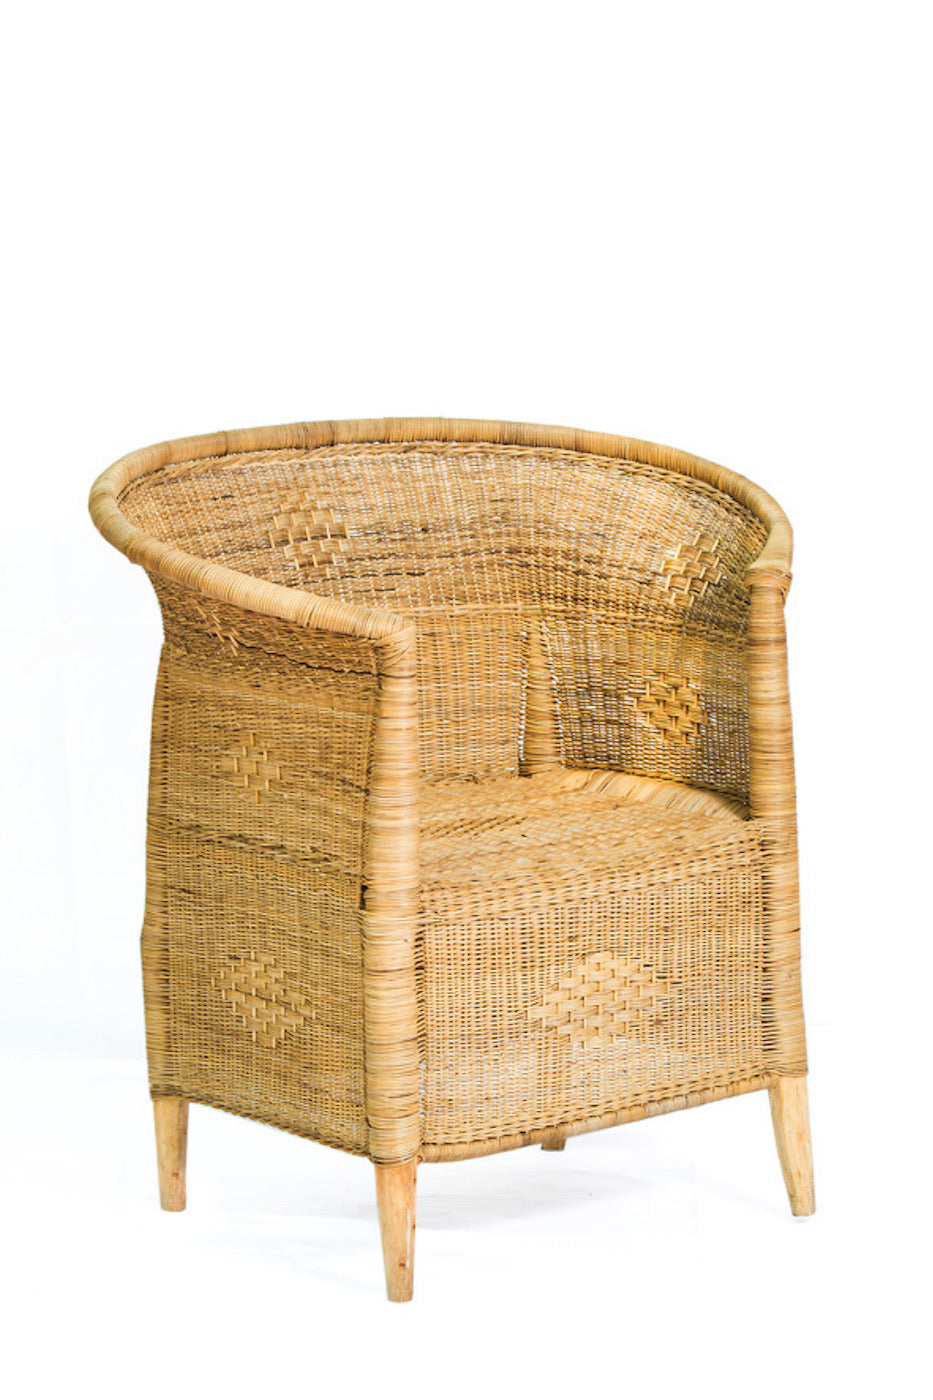 Malawi Full-Weave Cane Chair